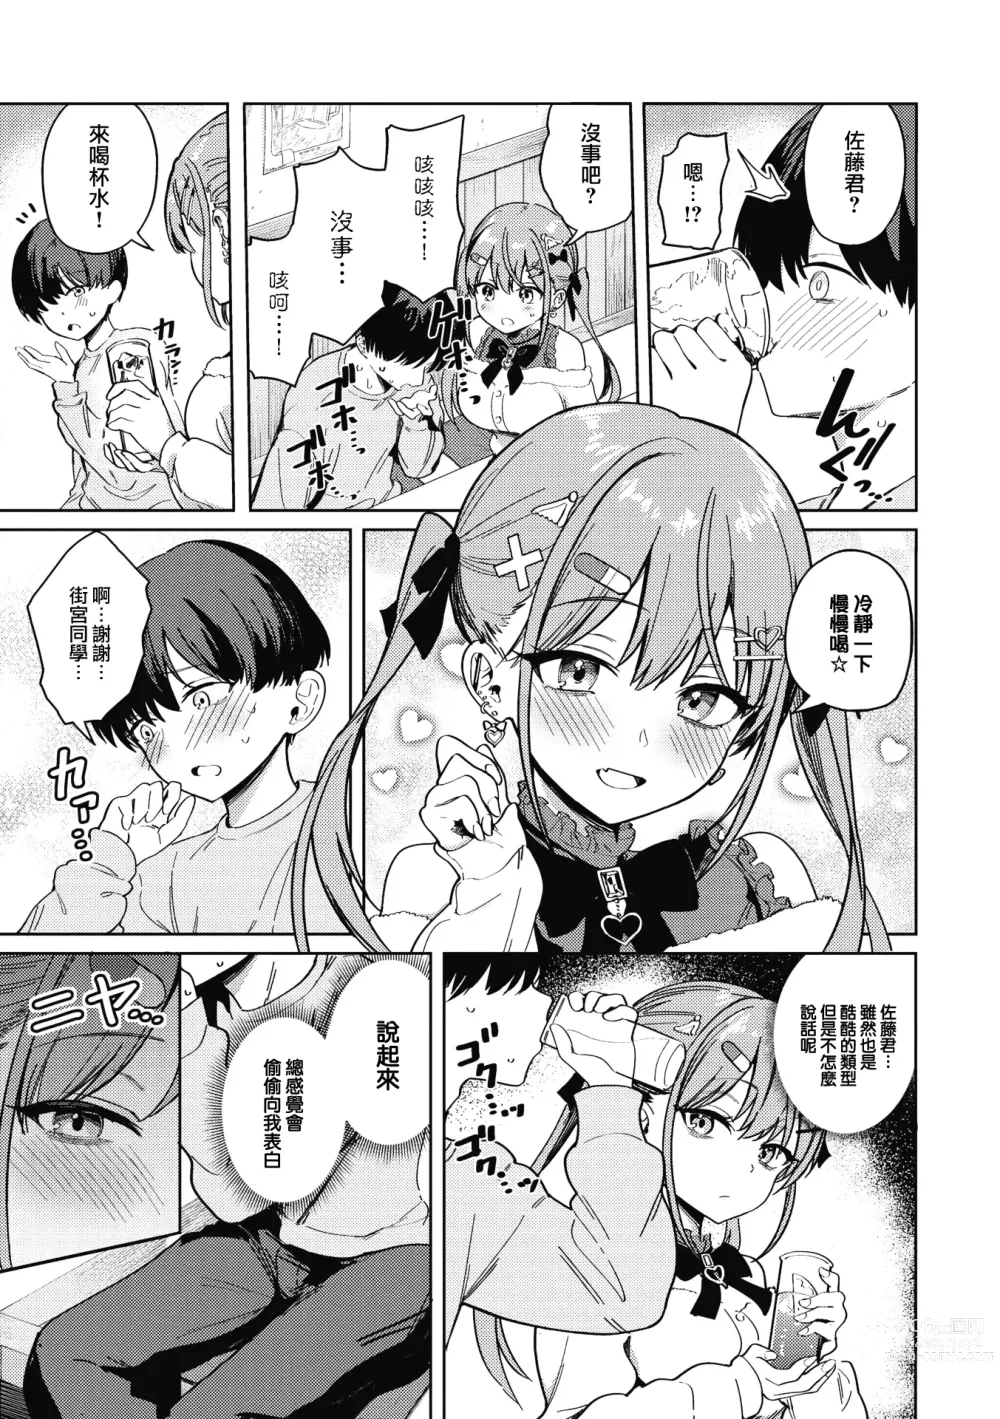 Page 4 of manga Best Match Mine Girl